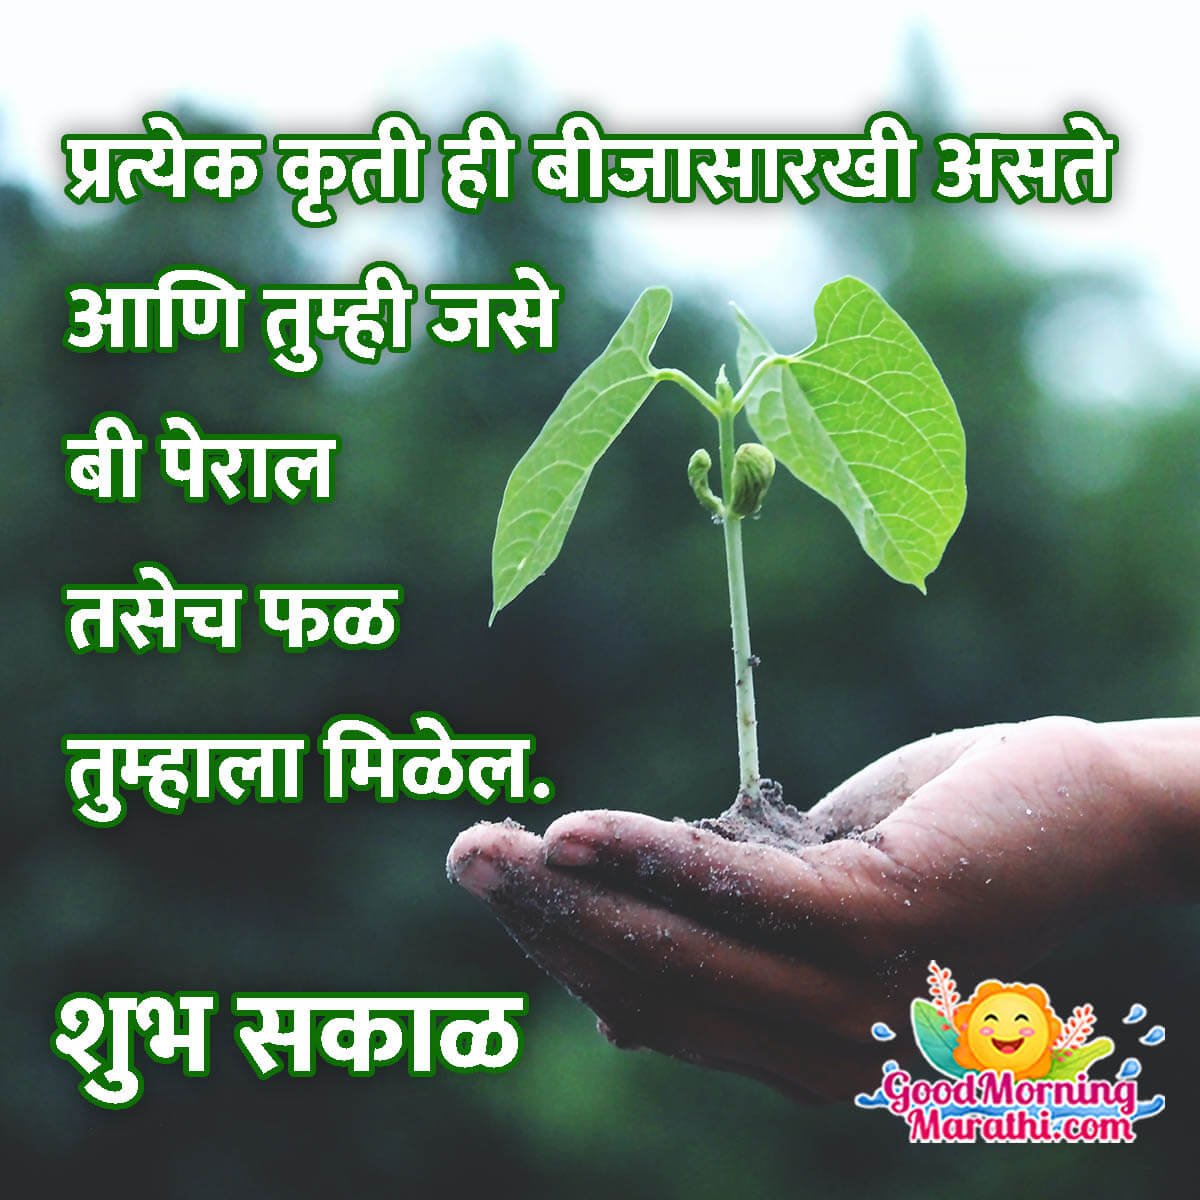 Best Morning Quotes On Karma In Marathi - Good Morning Wishes & Images In  Marathi